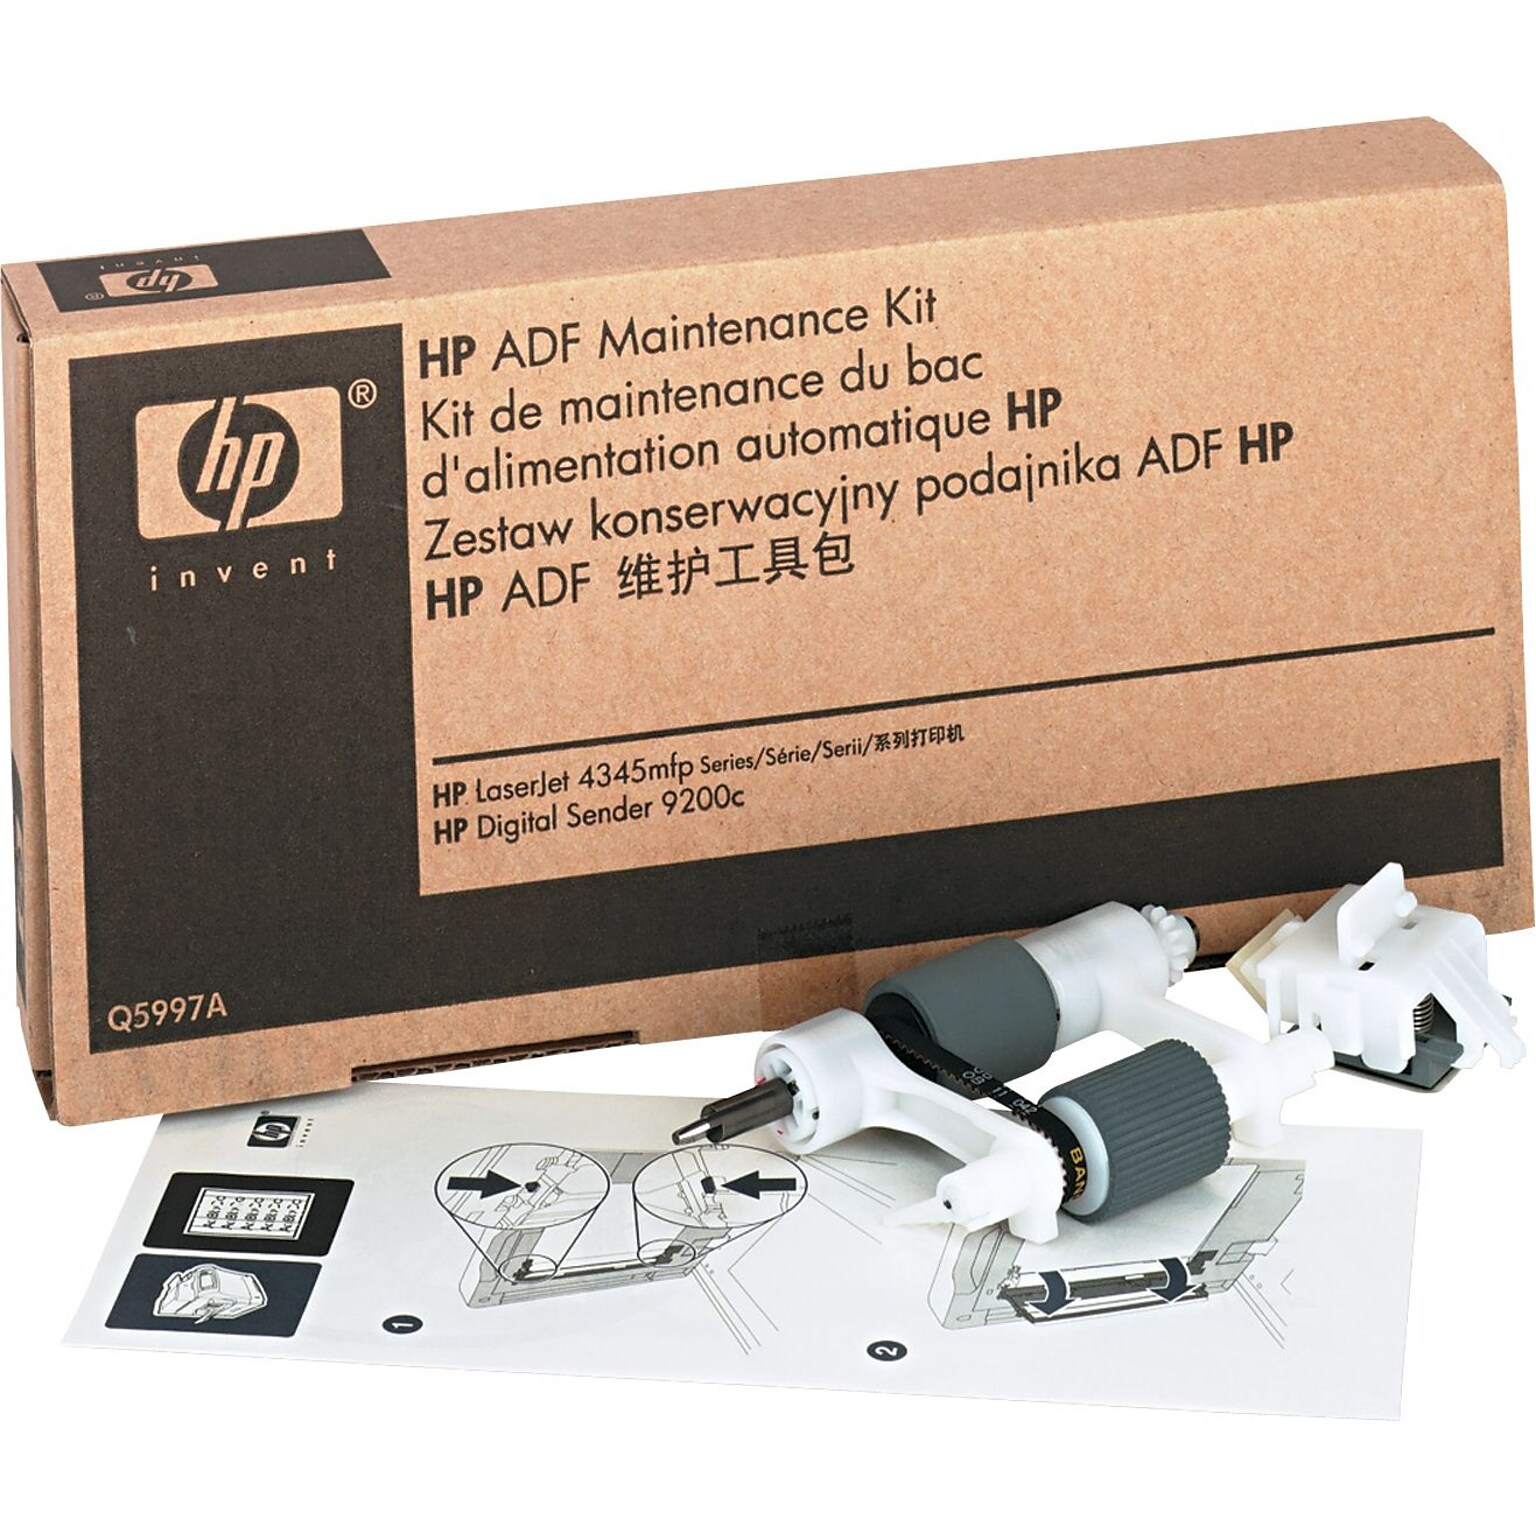 HP ADF Maintenance Kit (Q5997A)